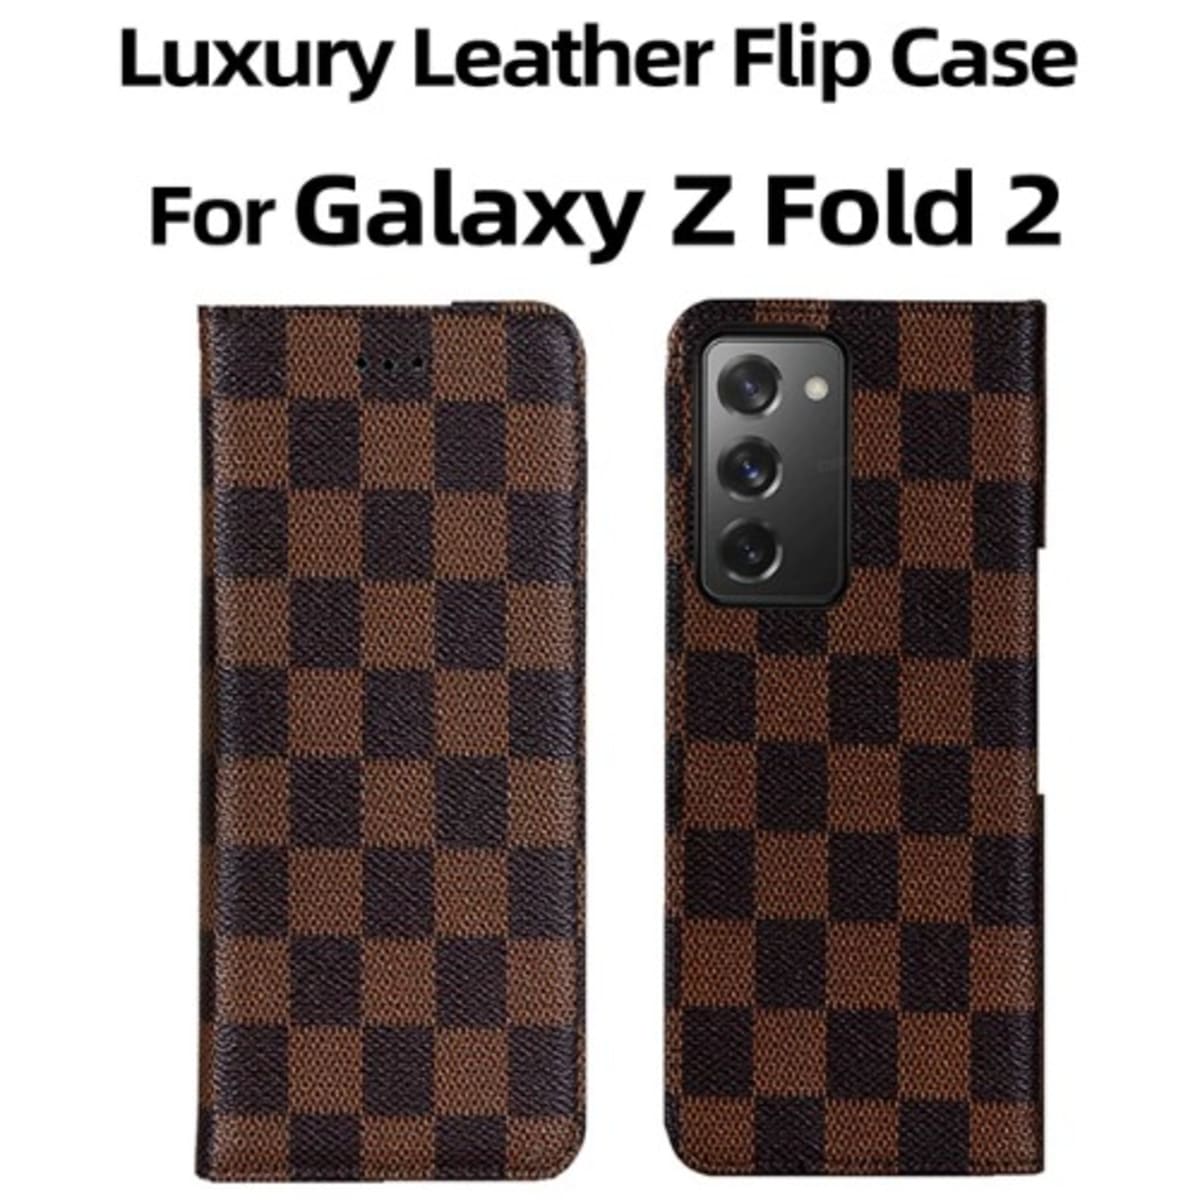 Louis vuitton sumsung galaxy z fold 4 leather case dior galaxy z